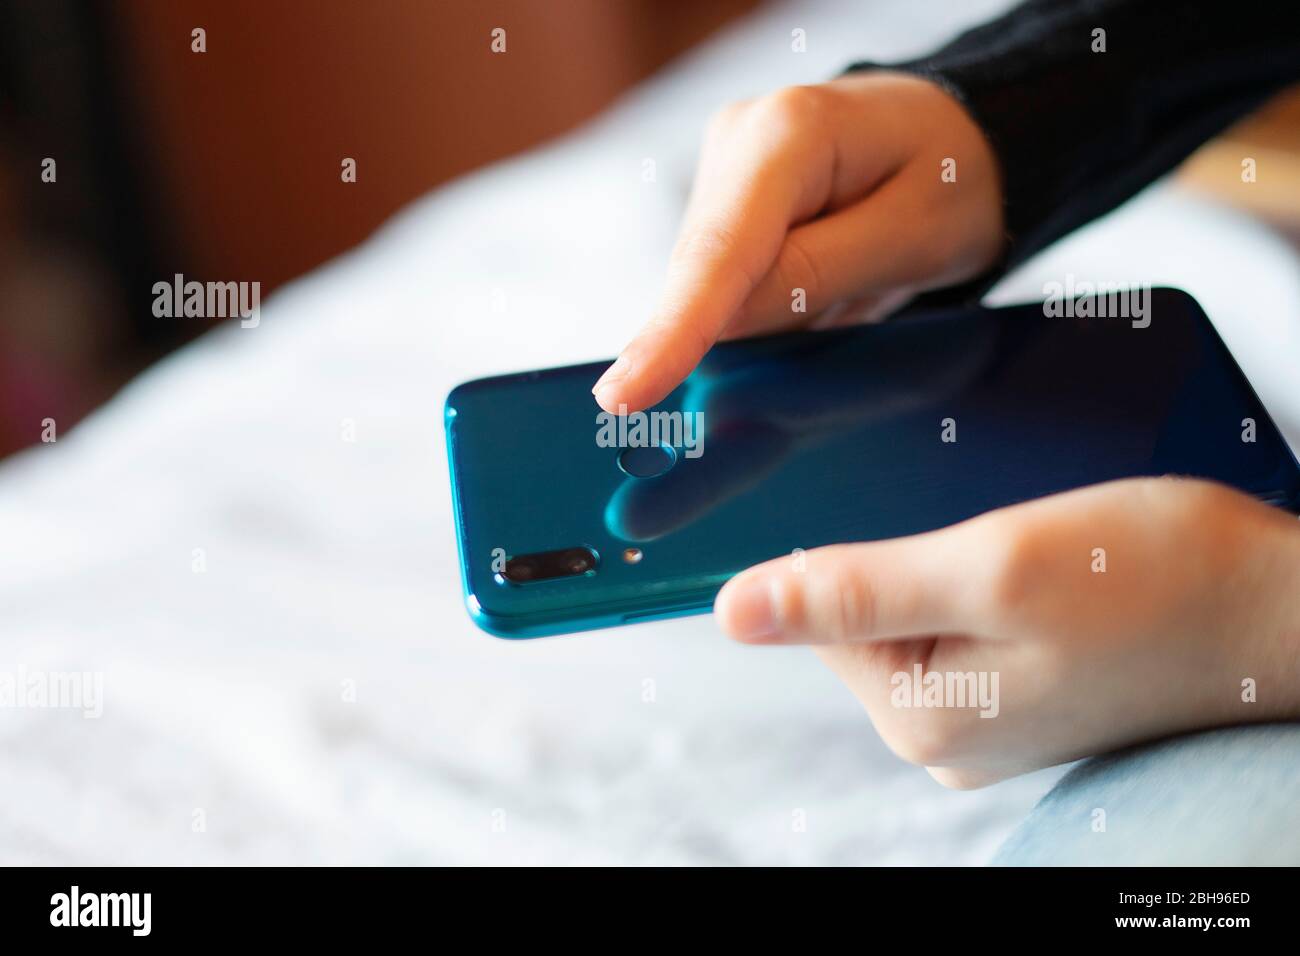 Hand unlocking the mobile with fingerprint. Stock Photo